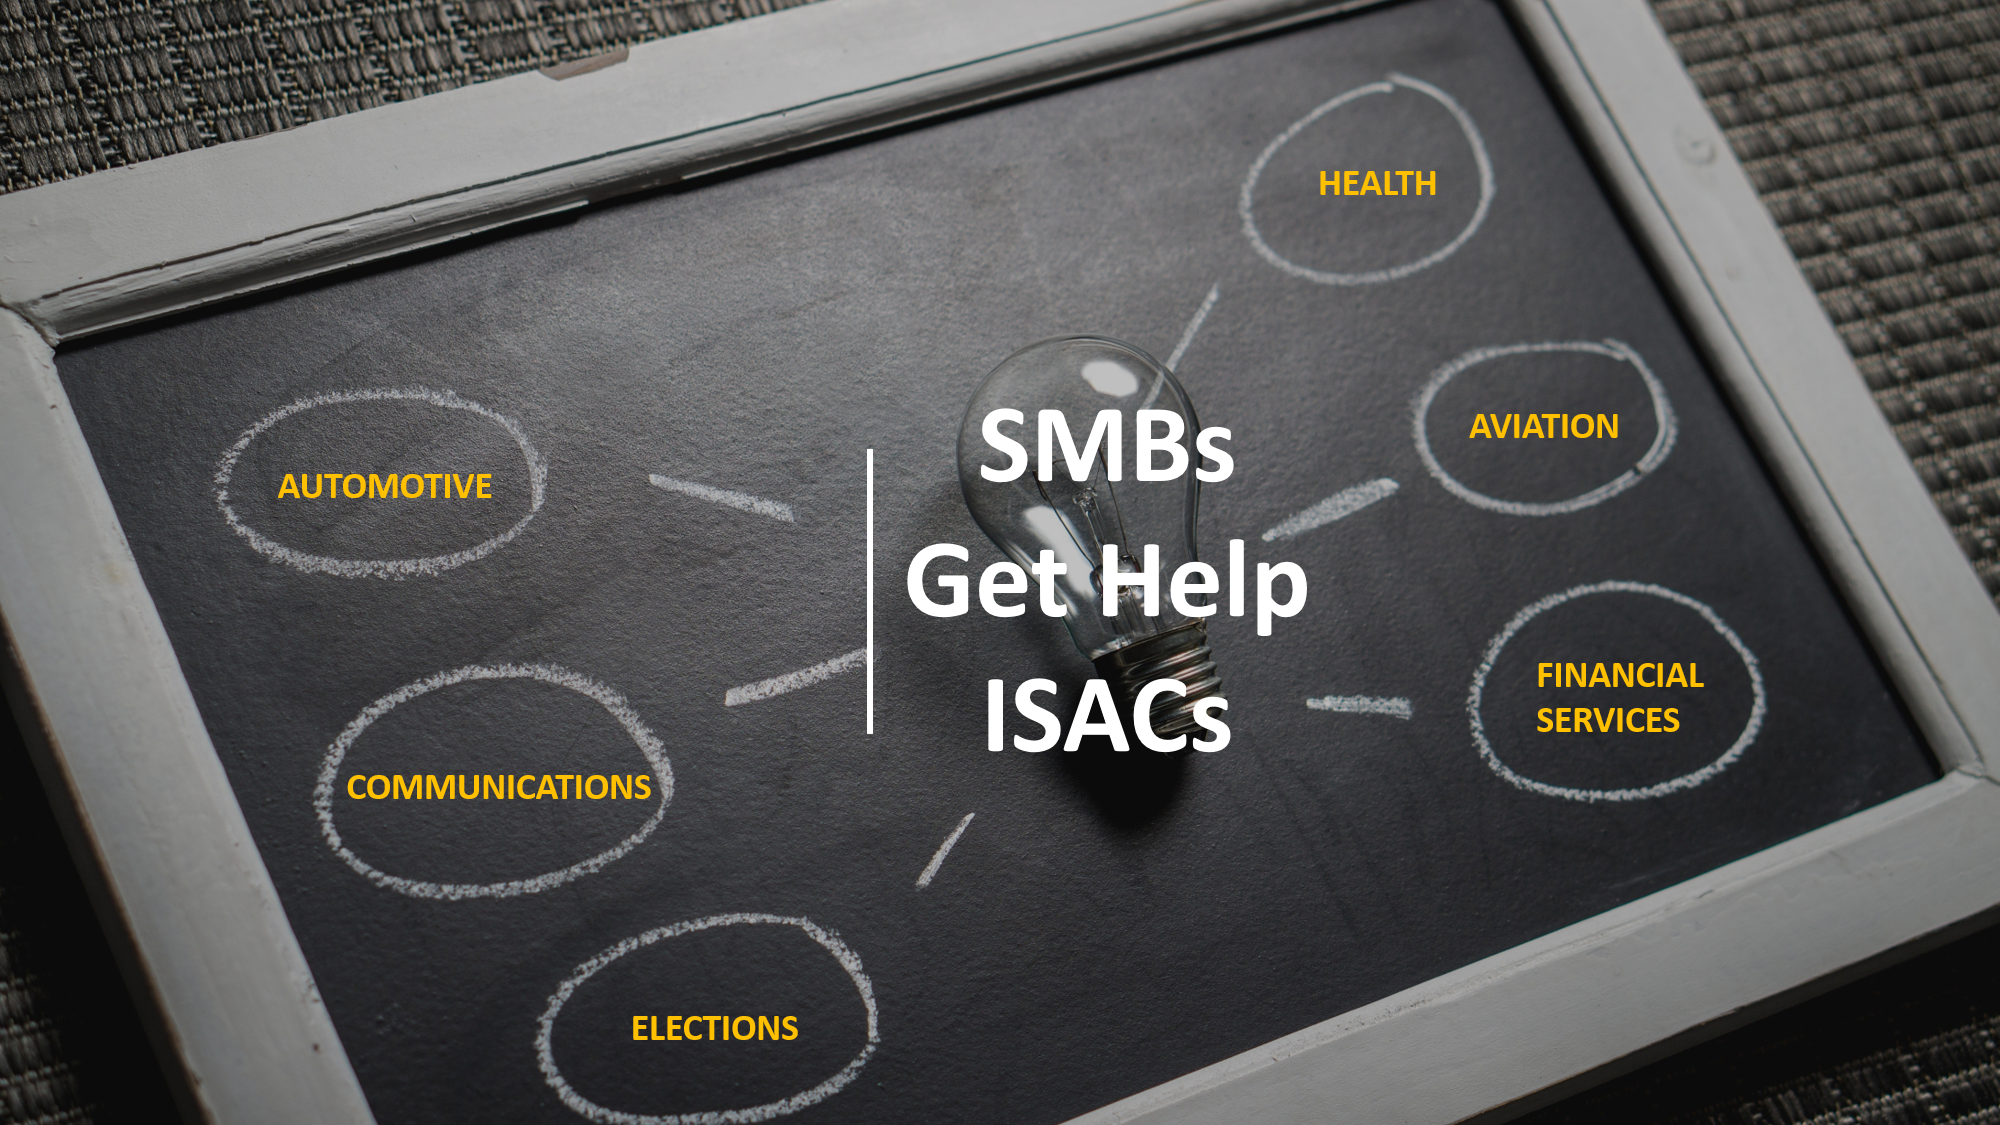 SMBs get help ISACs